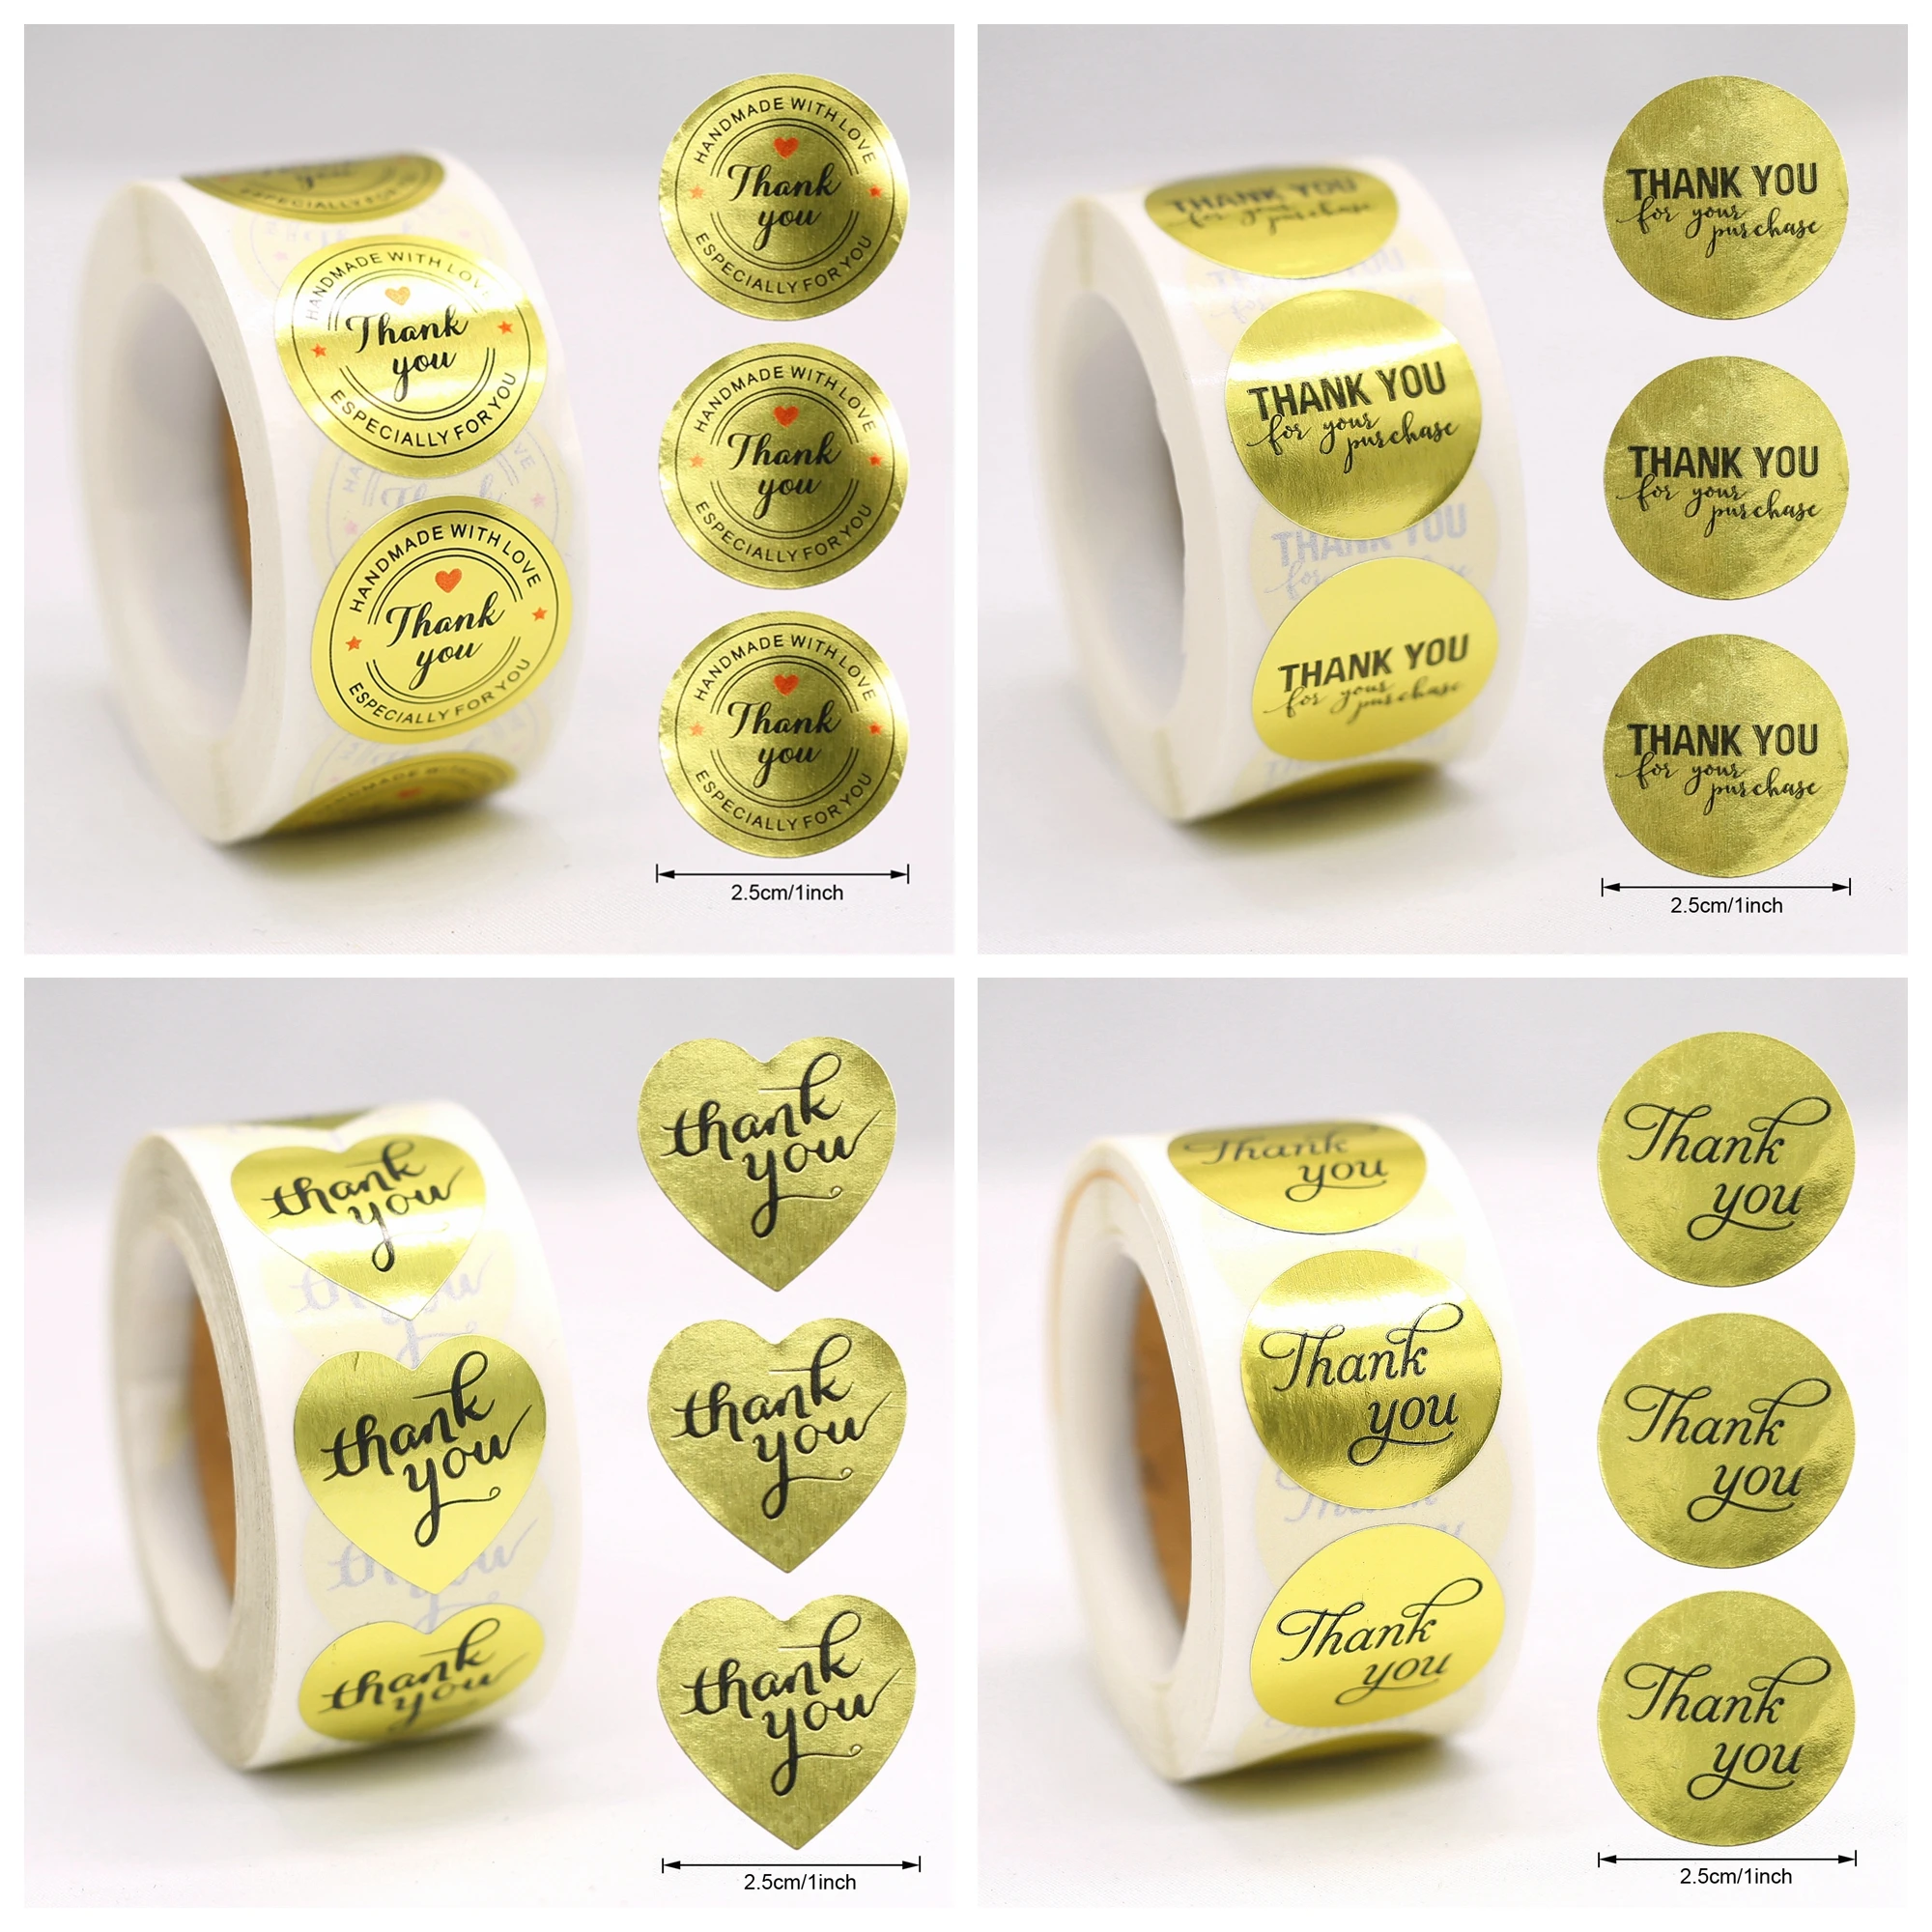 120pcs/lot new Golden Seal Sticker Heart Round Handmade Adhesive Kraft  Baking Gift Package Decoration Label